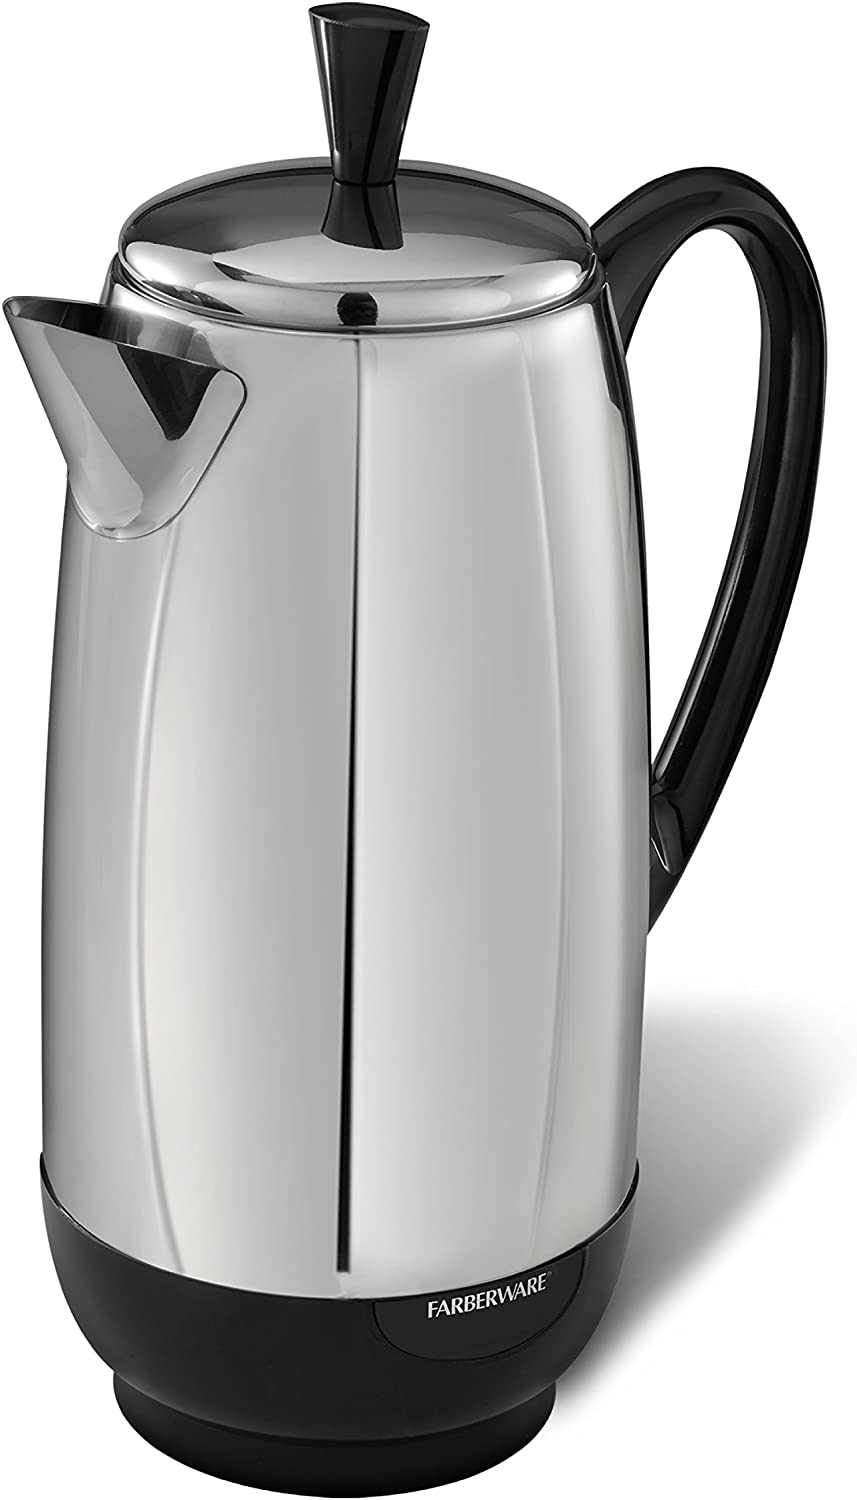 Farberware FCP412 Stainless Steel Coffee Percolator, 12-Cup